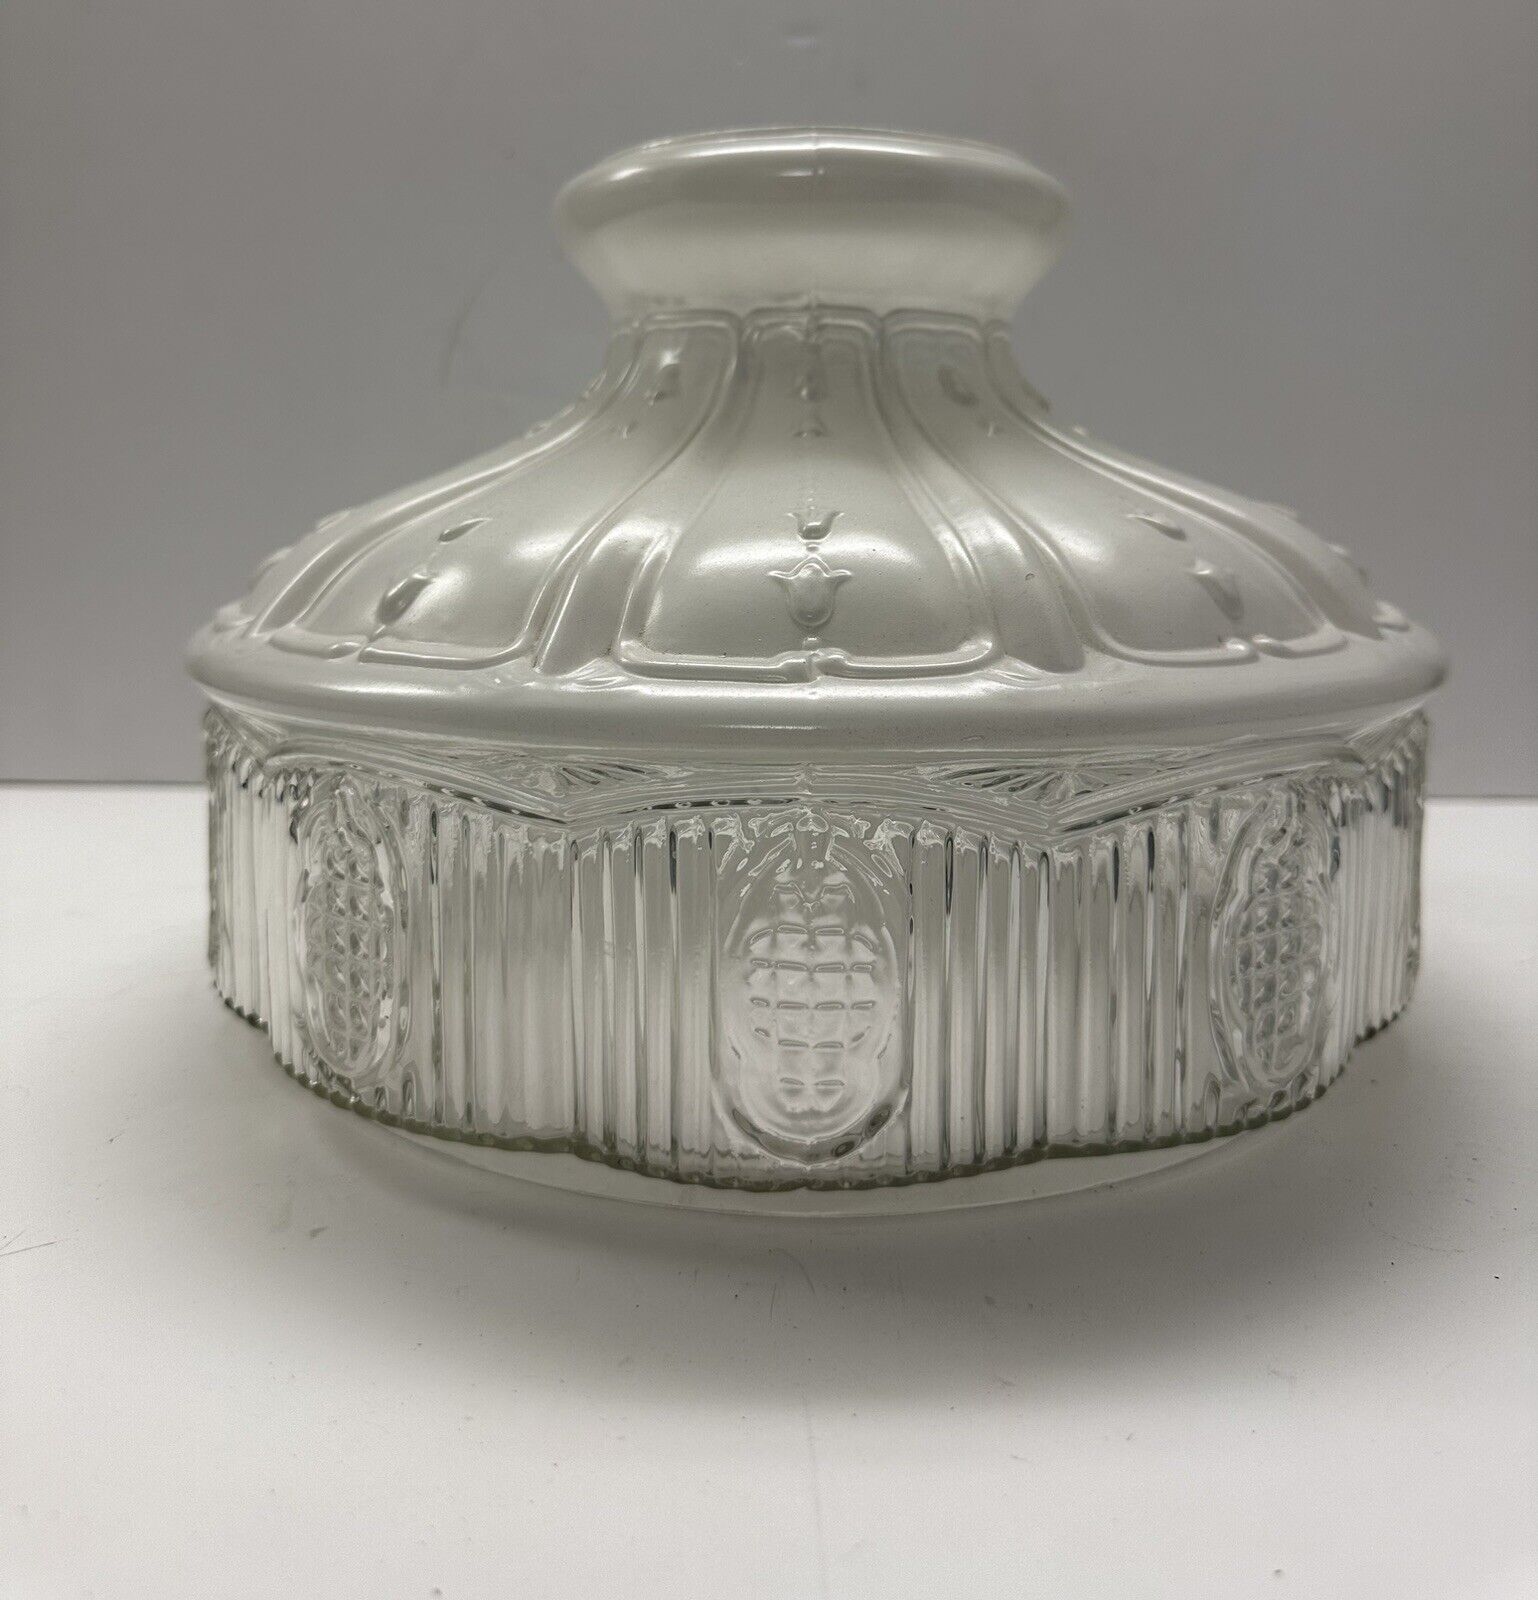 Original Aladdin 501-11 Oil Kerosene Glass Table Lamp Shade